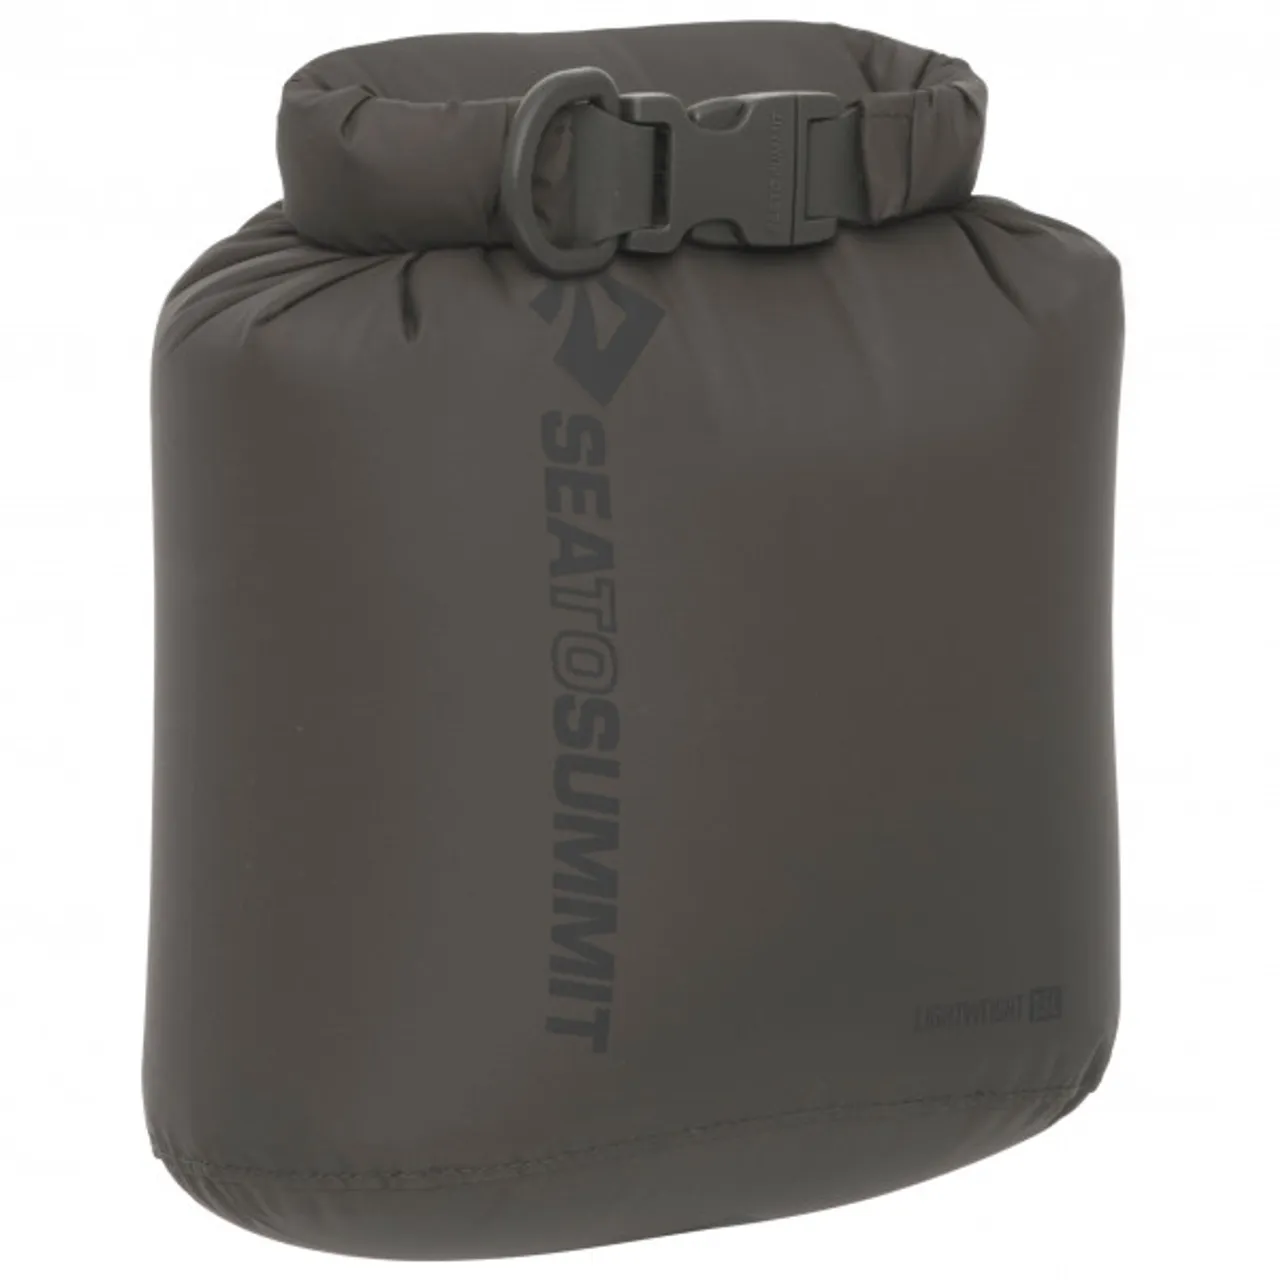 Sea to Summit - Lightweight Dry Bag - Packsack Gr 35 l braun/grau